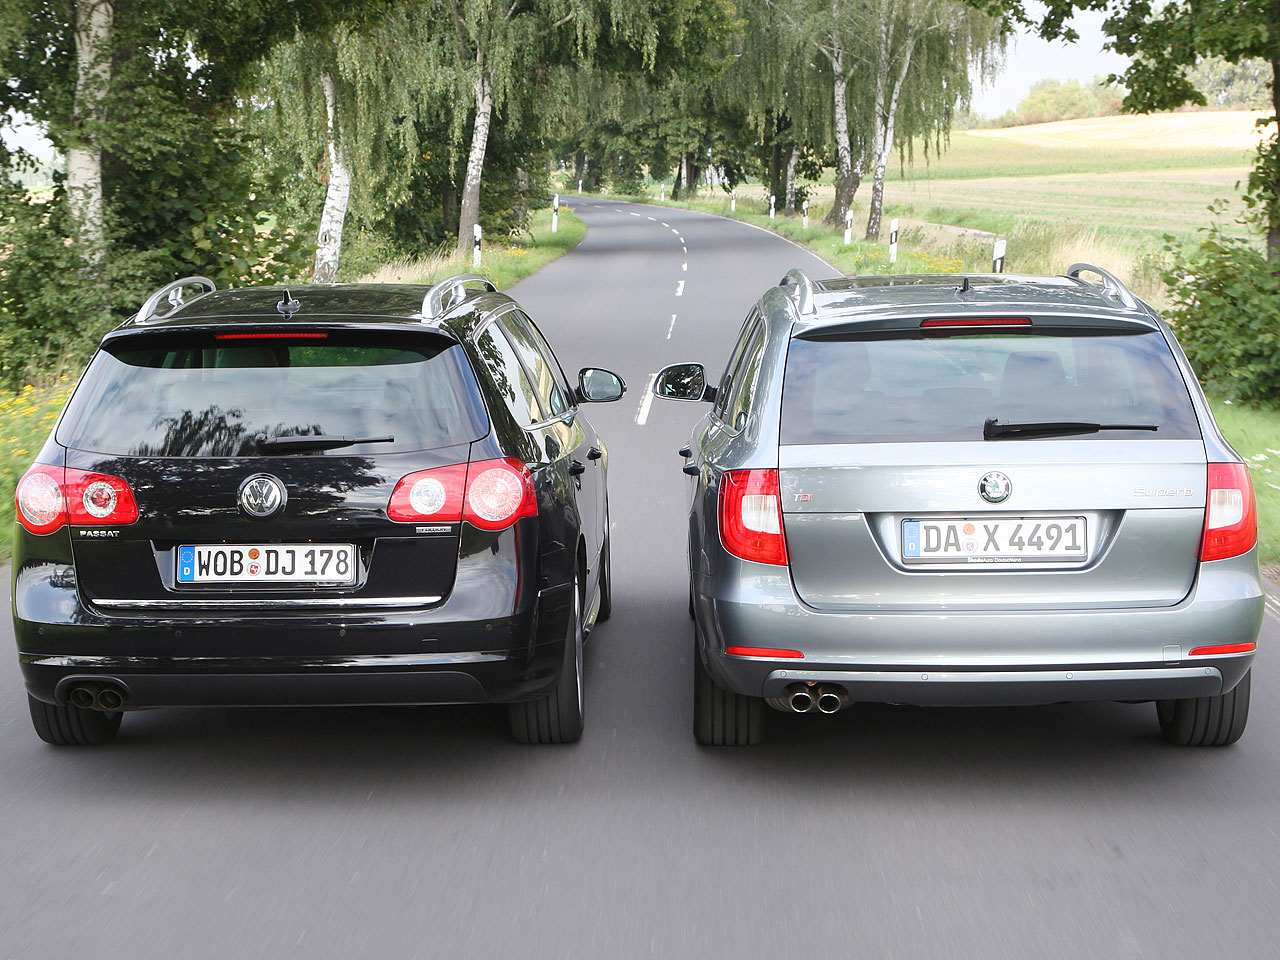 VW Passat Variant/Skoda Octavia Combi: Vergleich